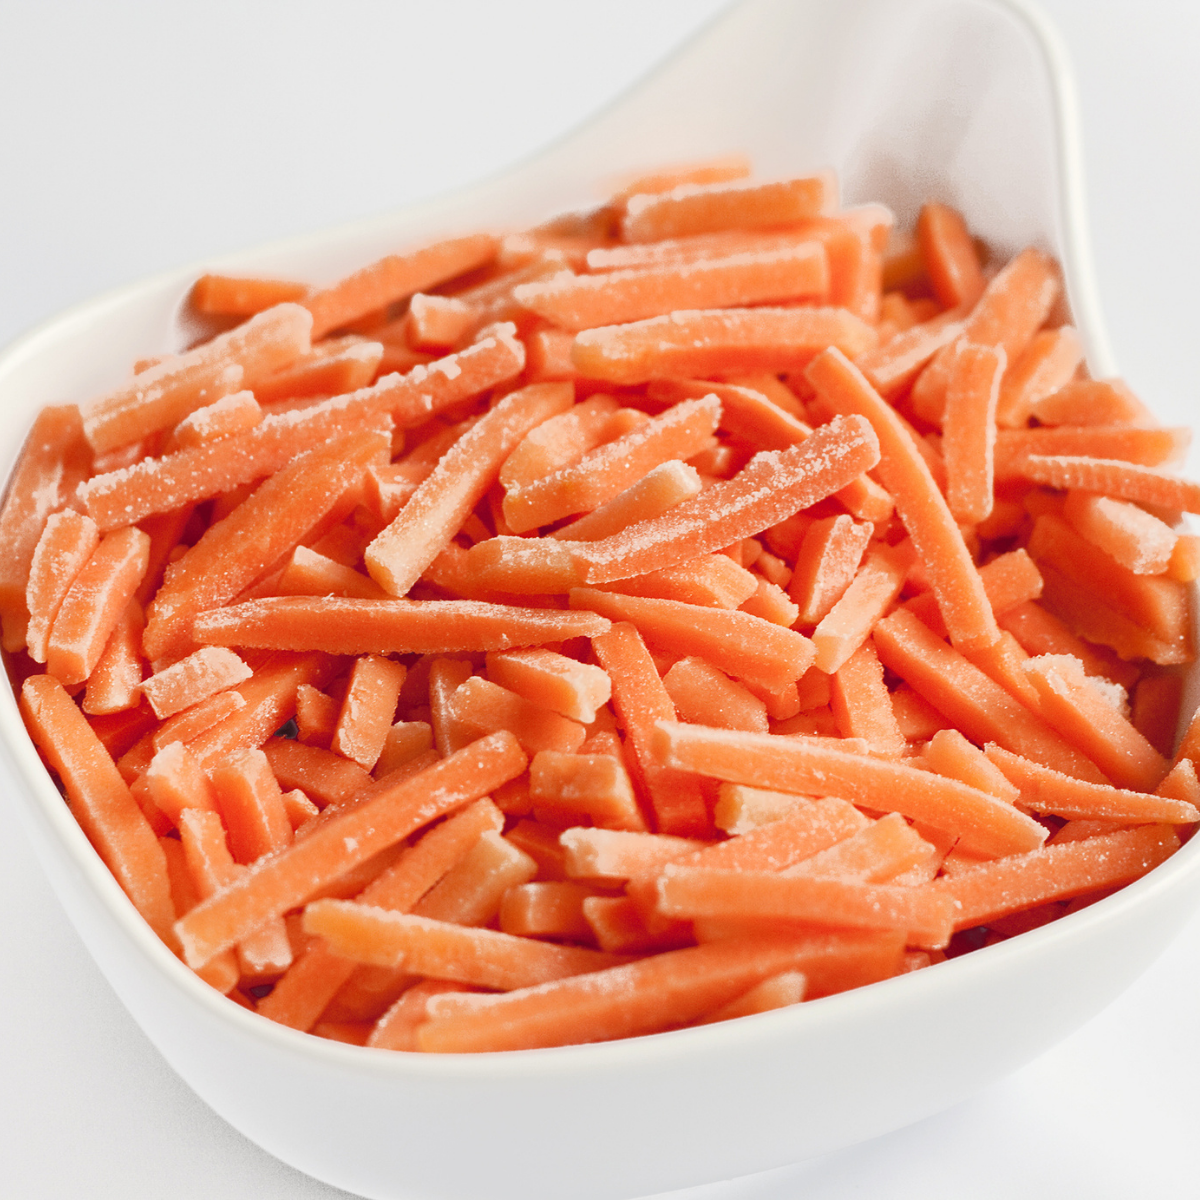 Magnihill's Carrot shredded KRAV'